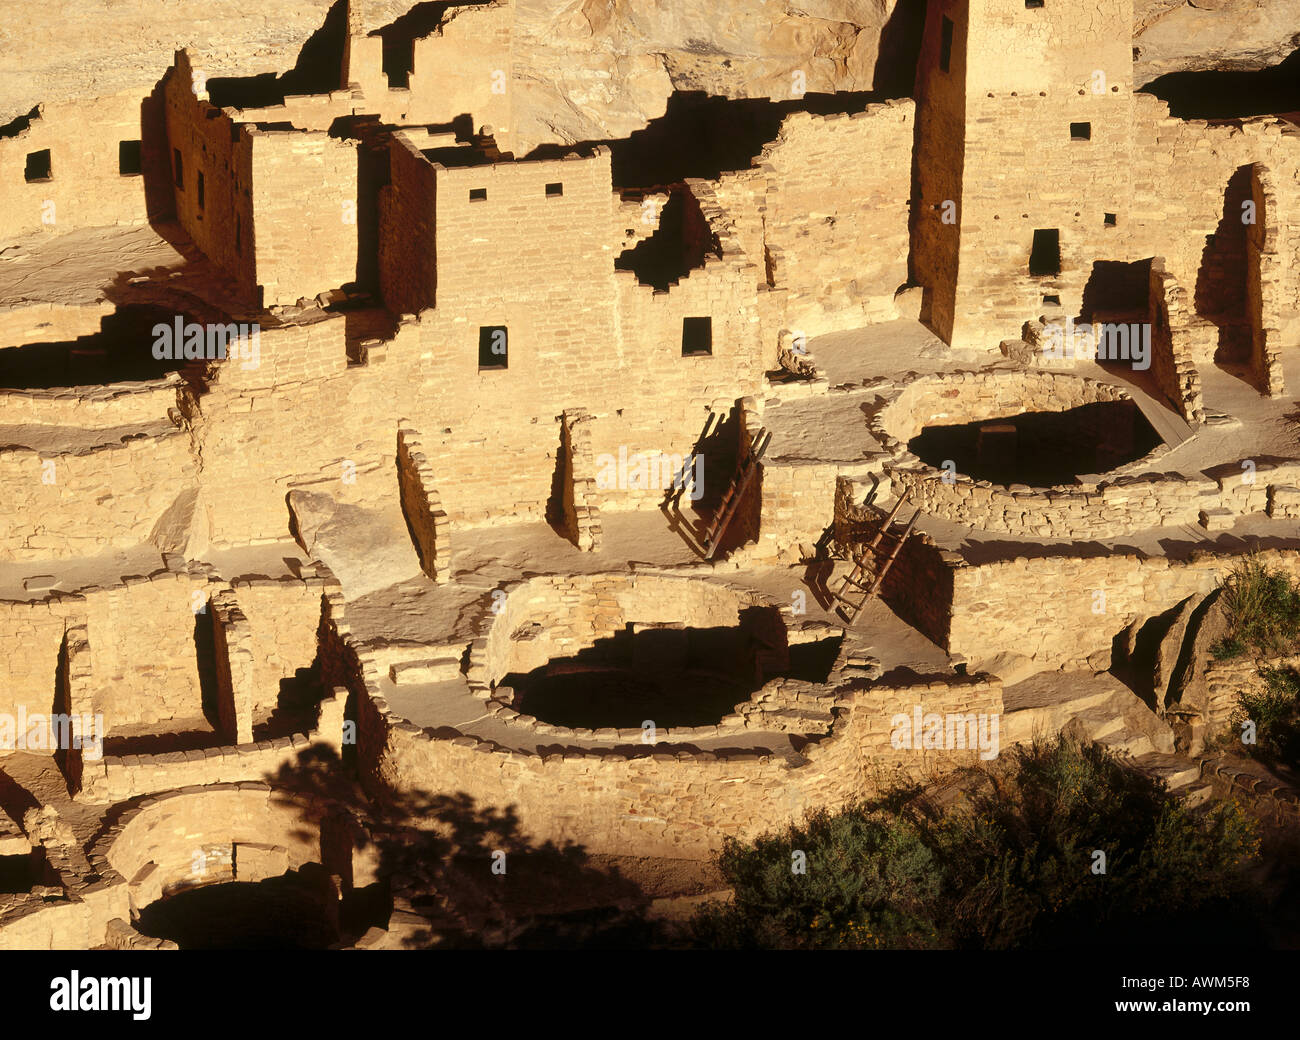 Ruines de bâtiments historiques adobe, Ruines Anasazi, Mesa Verde National Park, Colorado, USA Banque D'Images